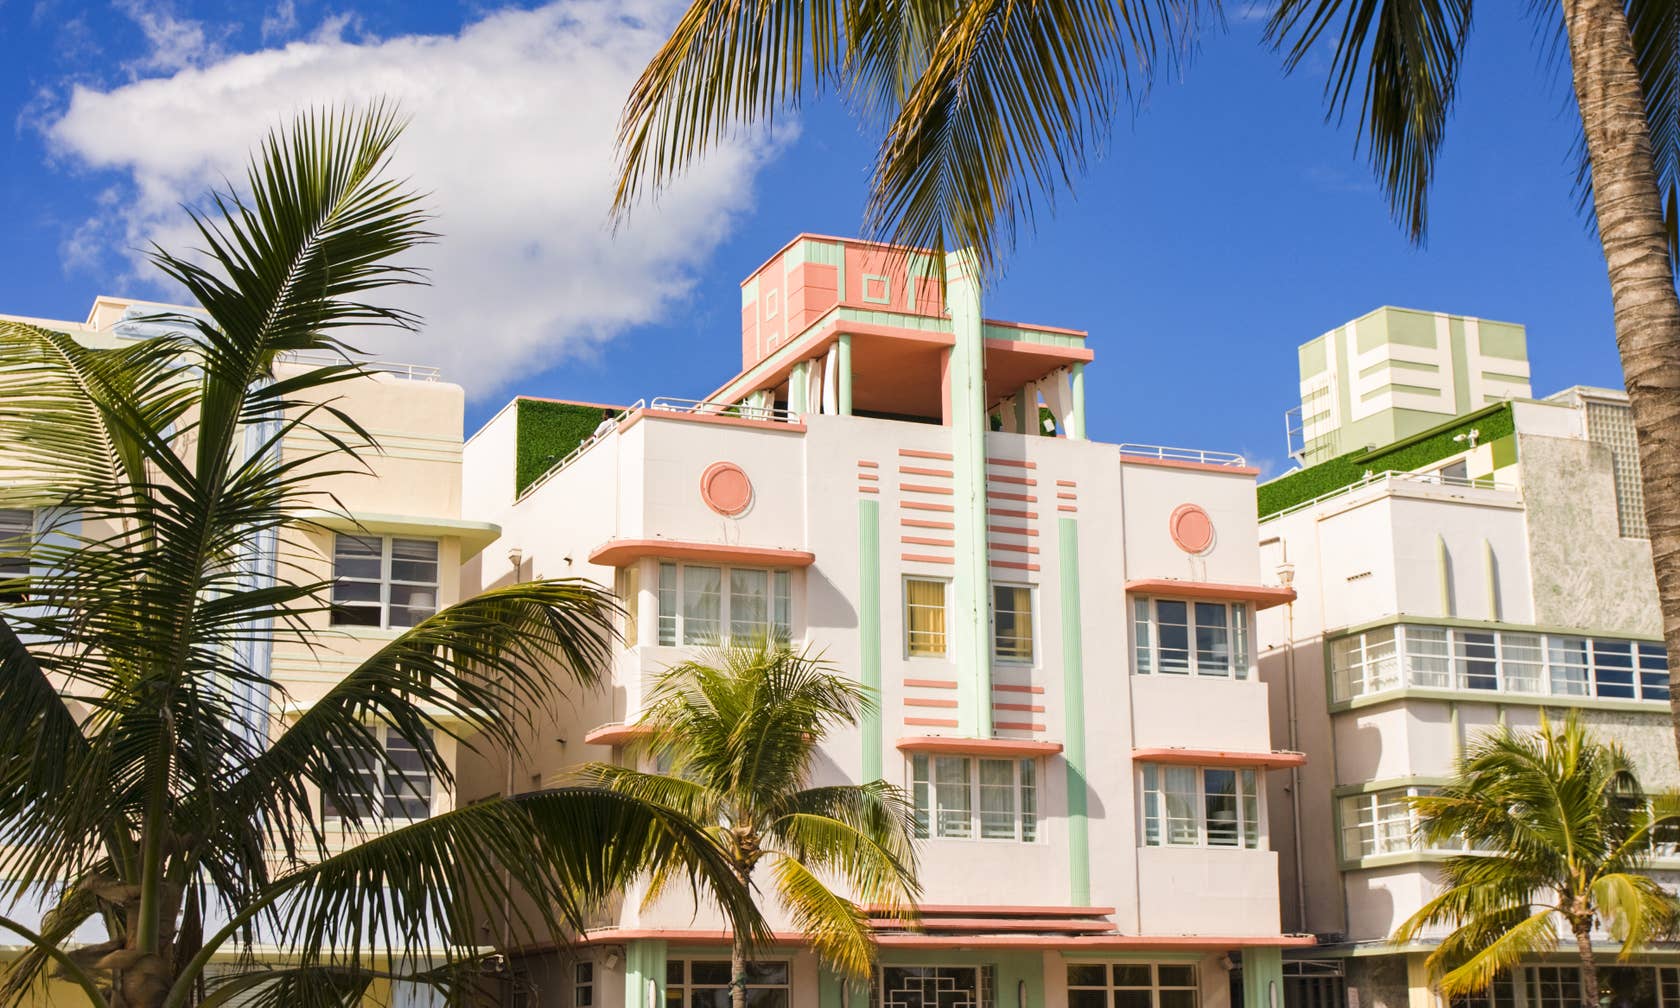 Holiday rentals in South Beach, Miami Beach